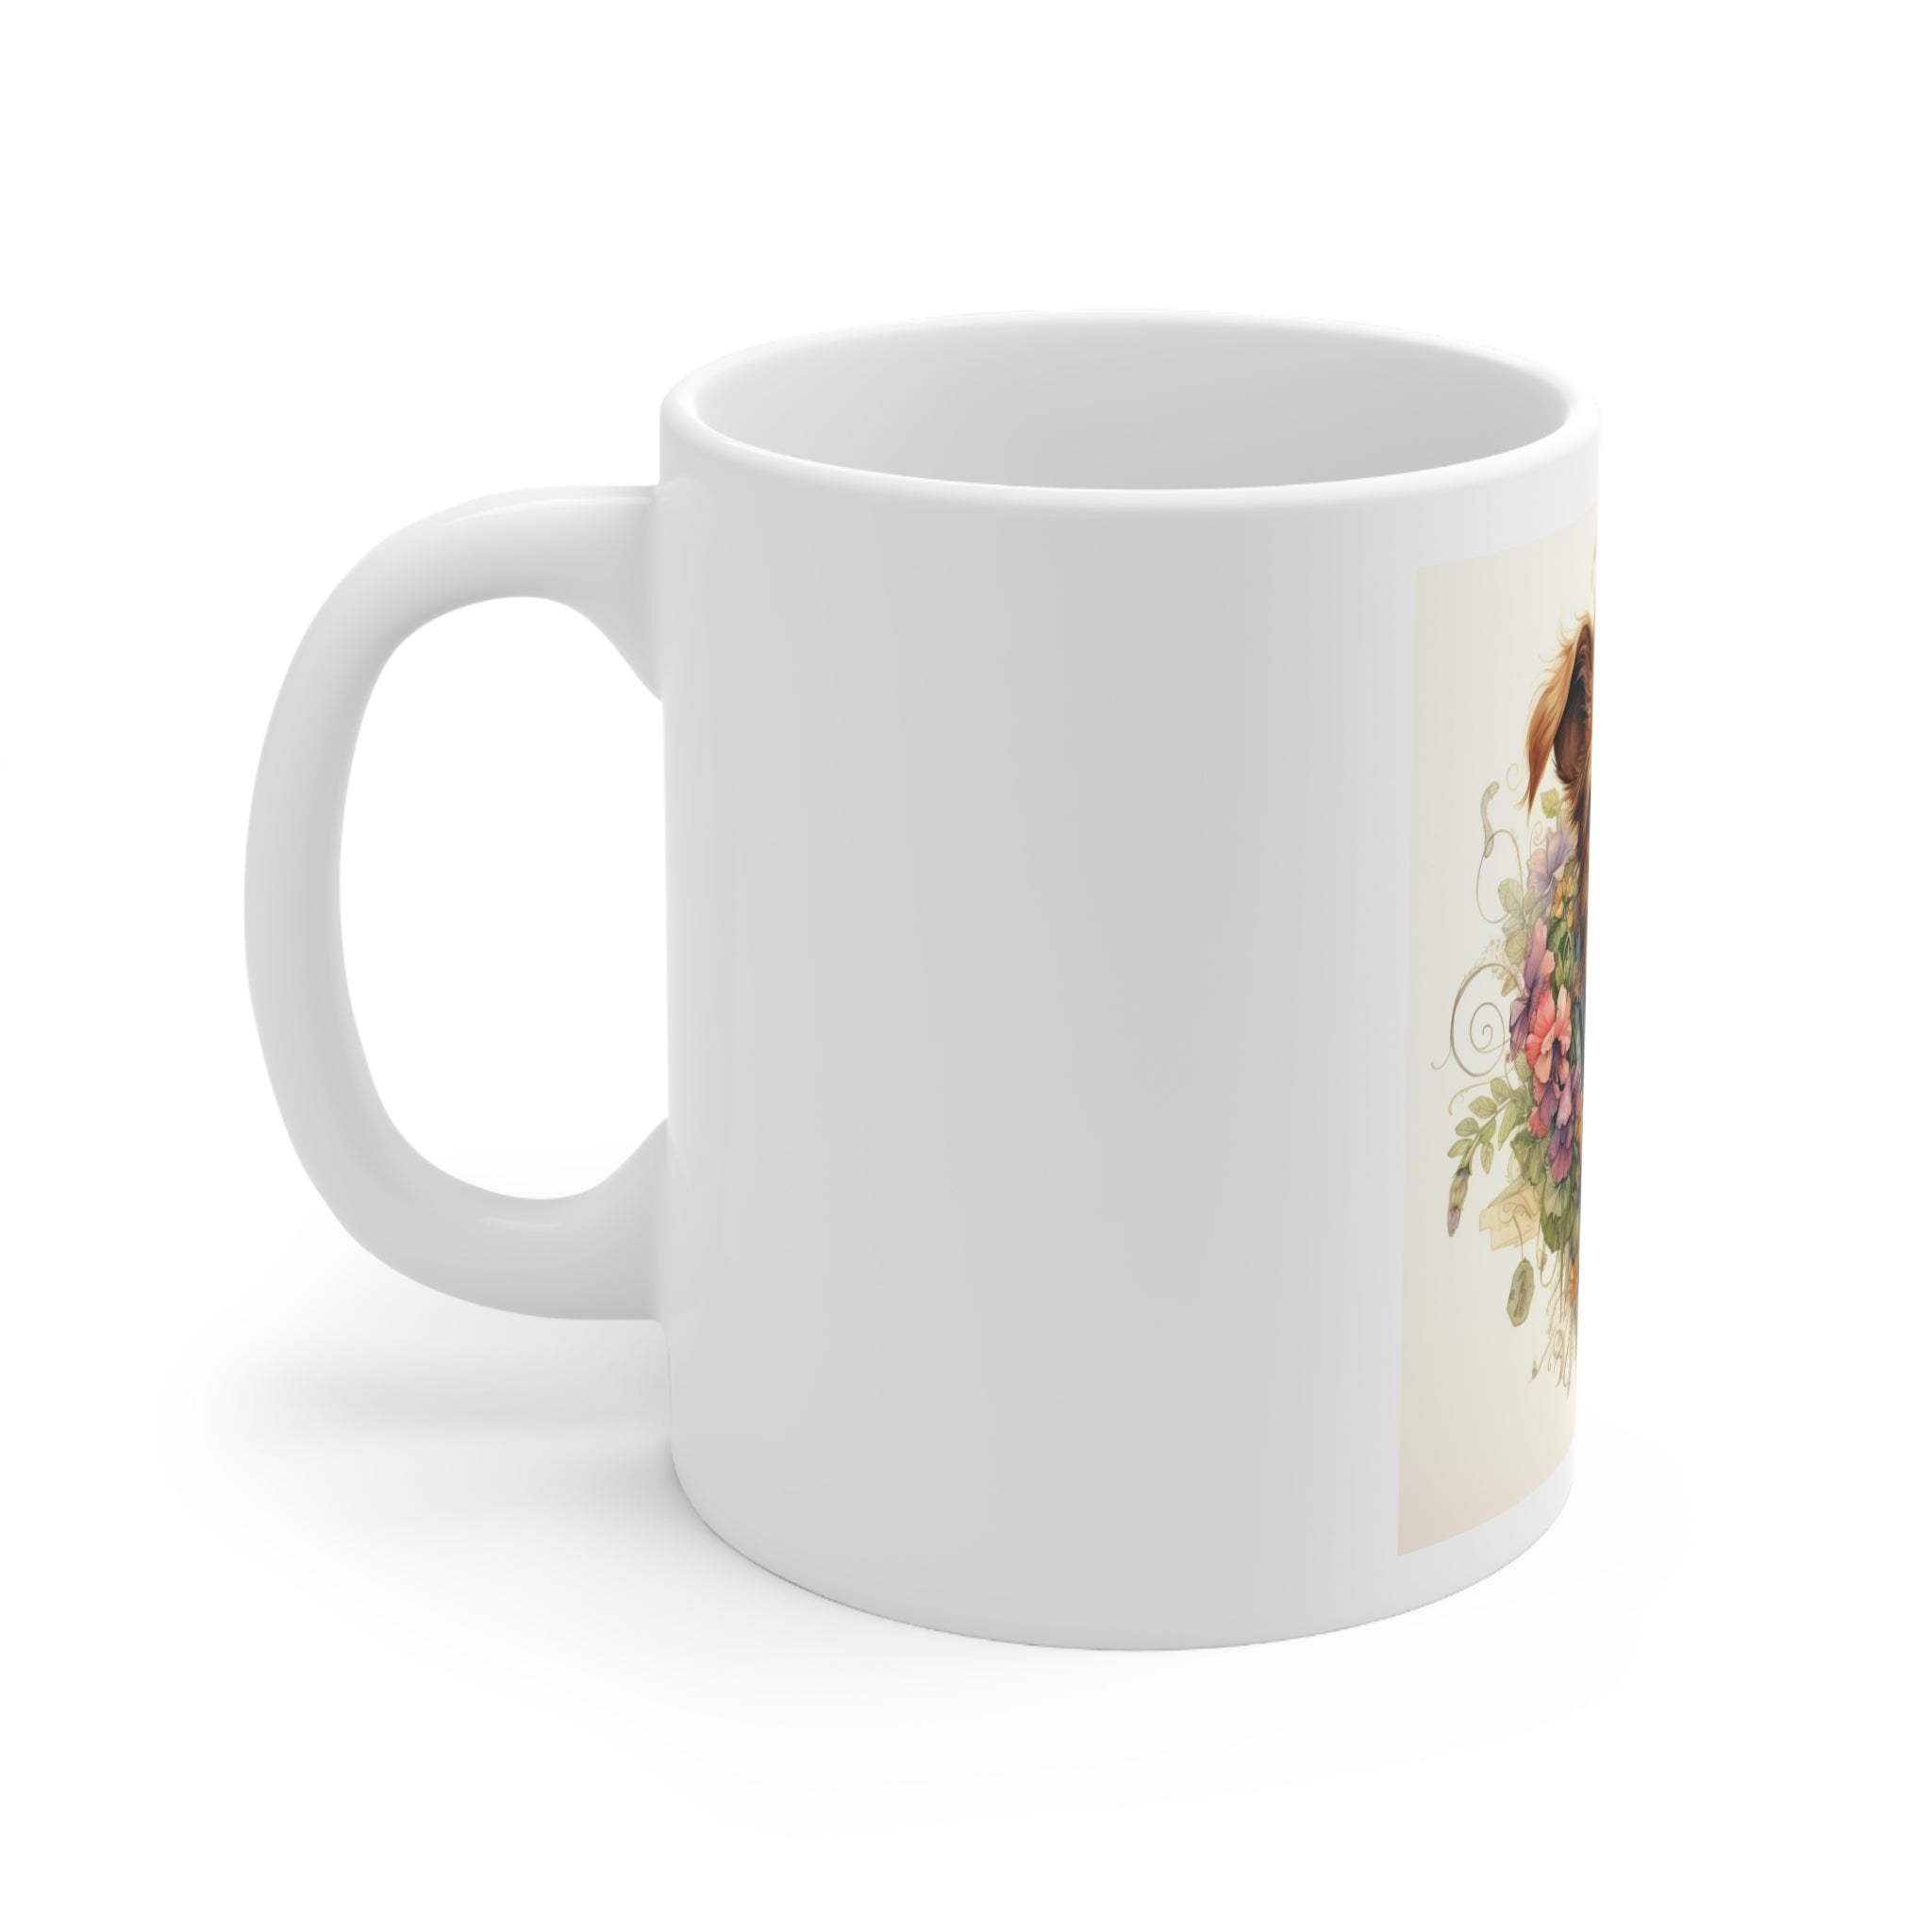 11oz Ceramic Mug: Exclusive Floral Doggy Design | Professional Artwork | Ideal for Mornings